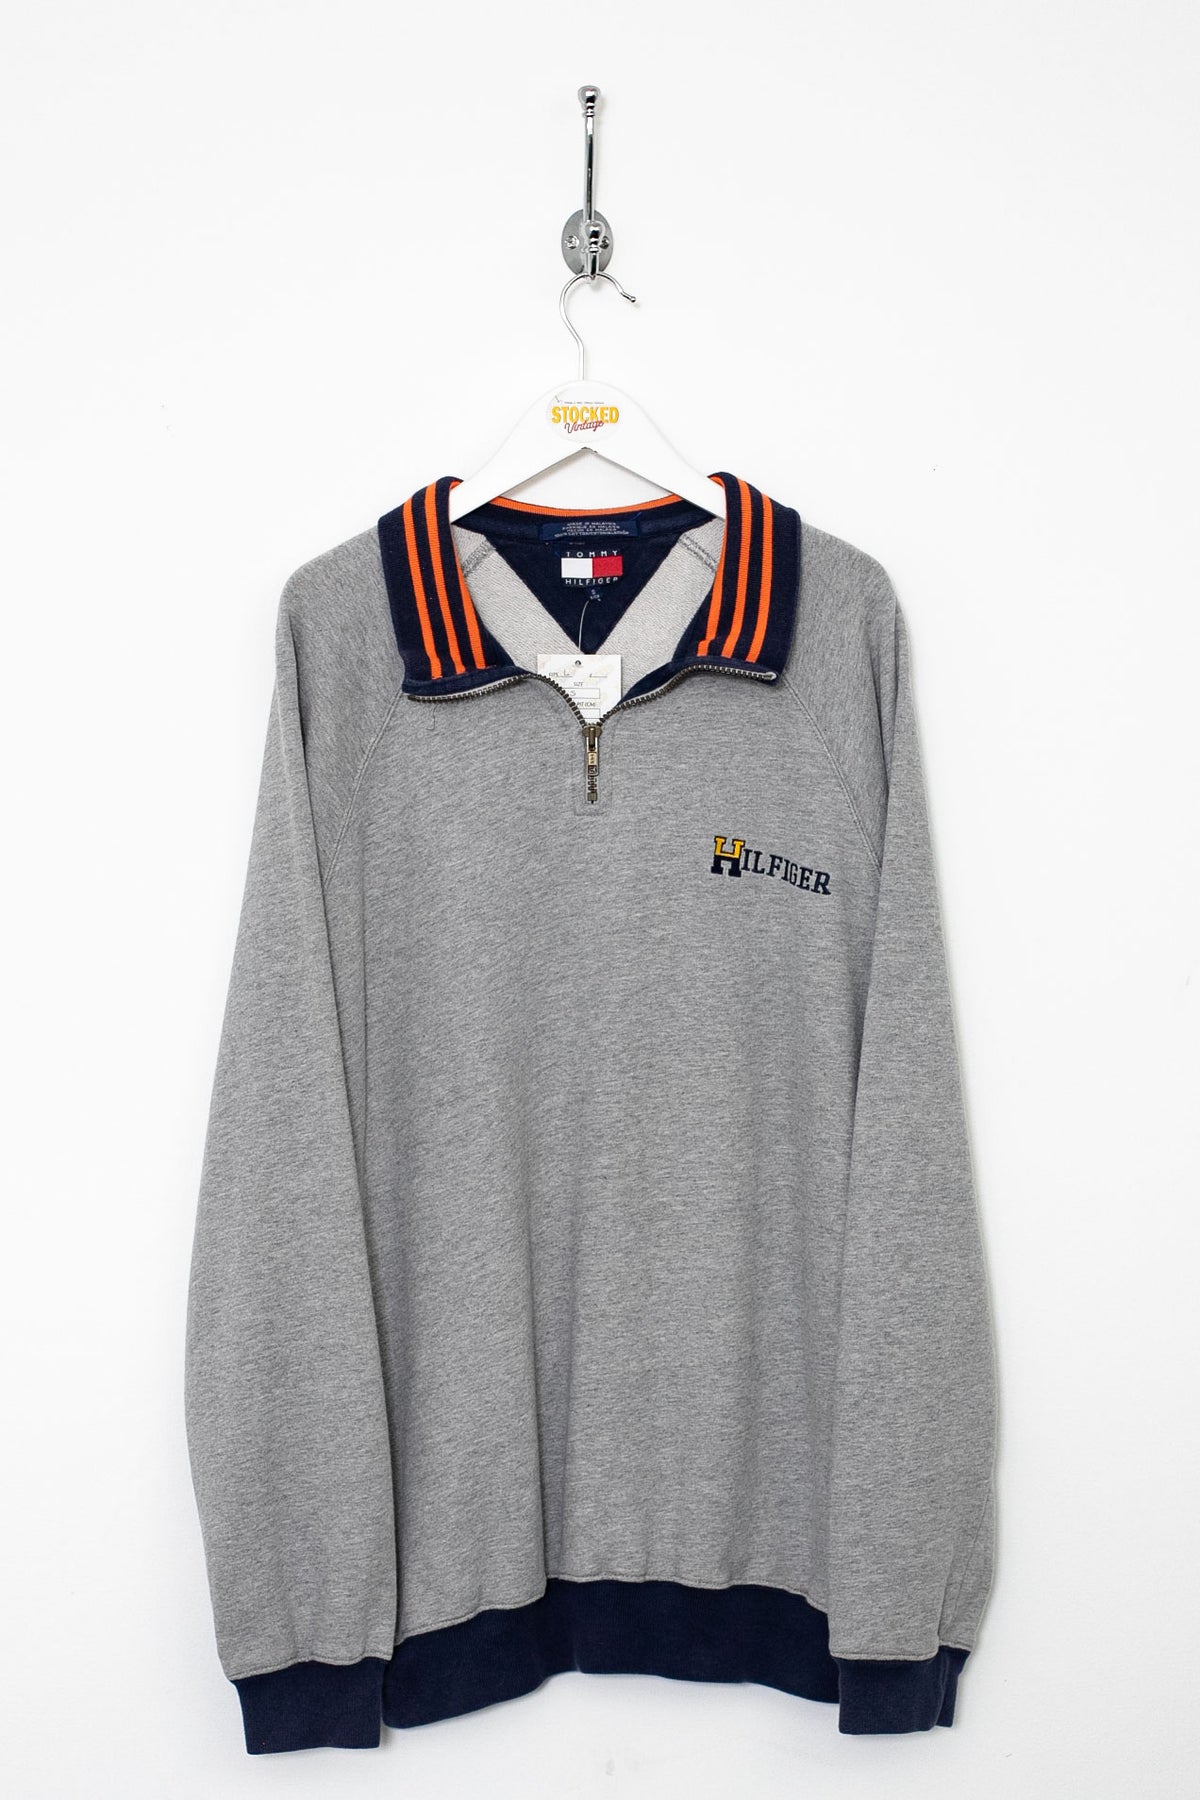 90s Tommy Hilfiger 1/4 Zip Sweatshirt (L)